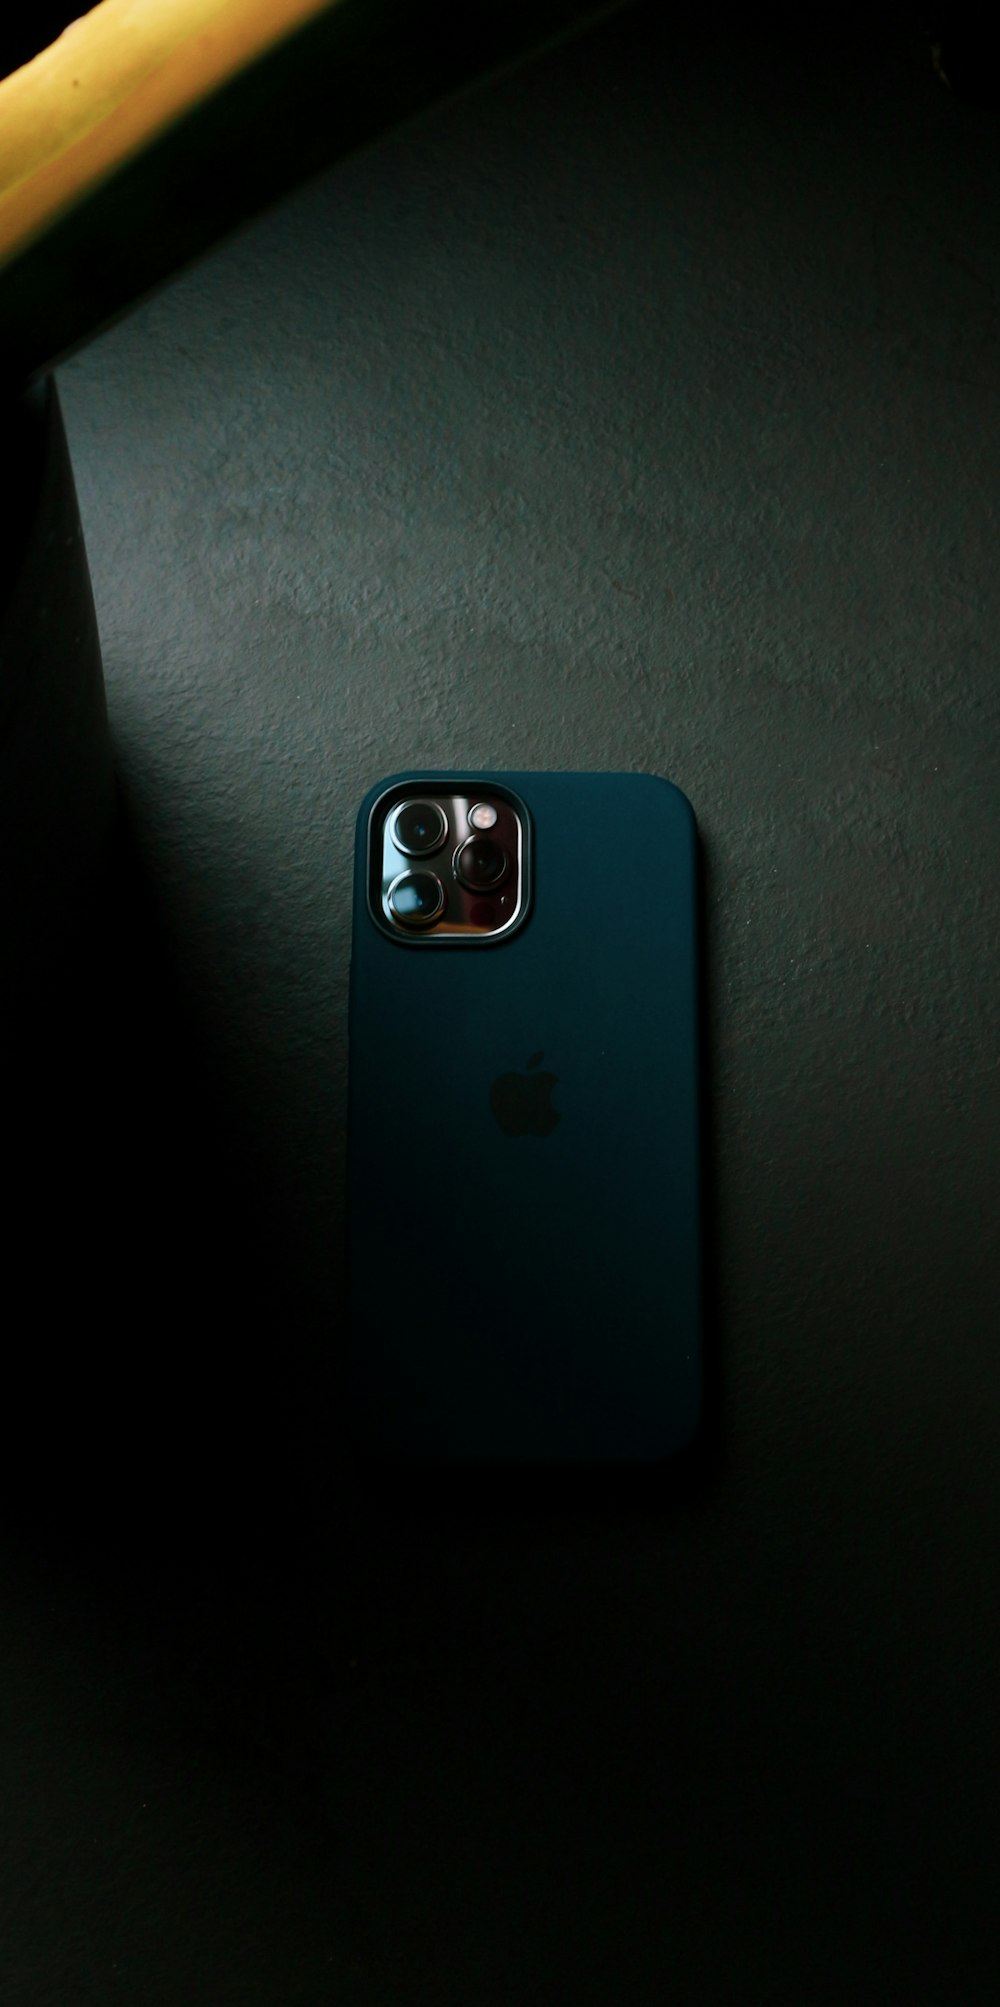 Blaue iPhone Hülle auf grauem Textil